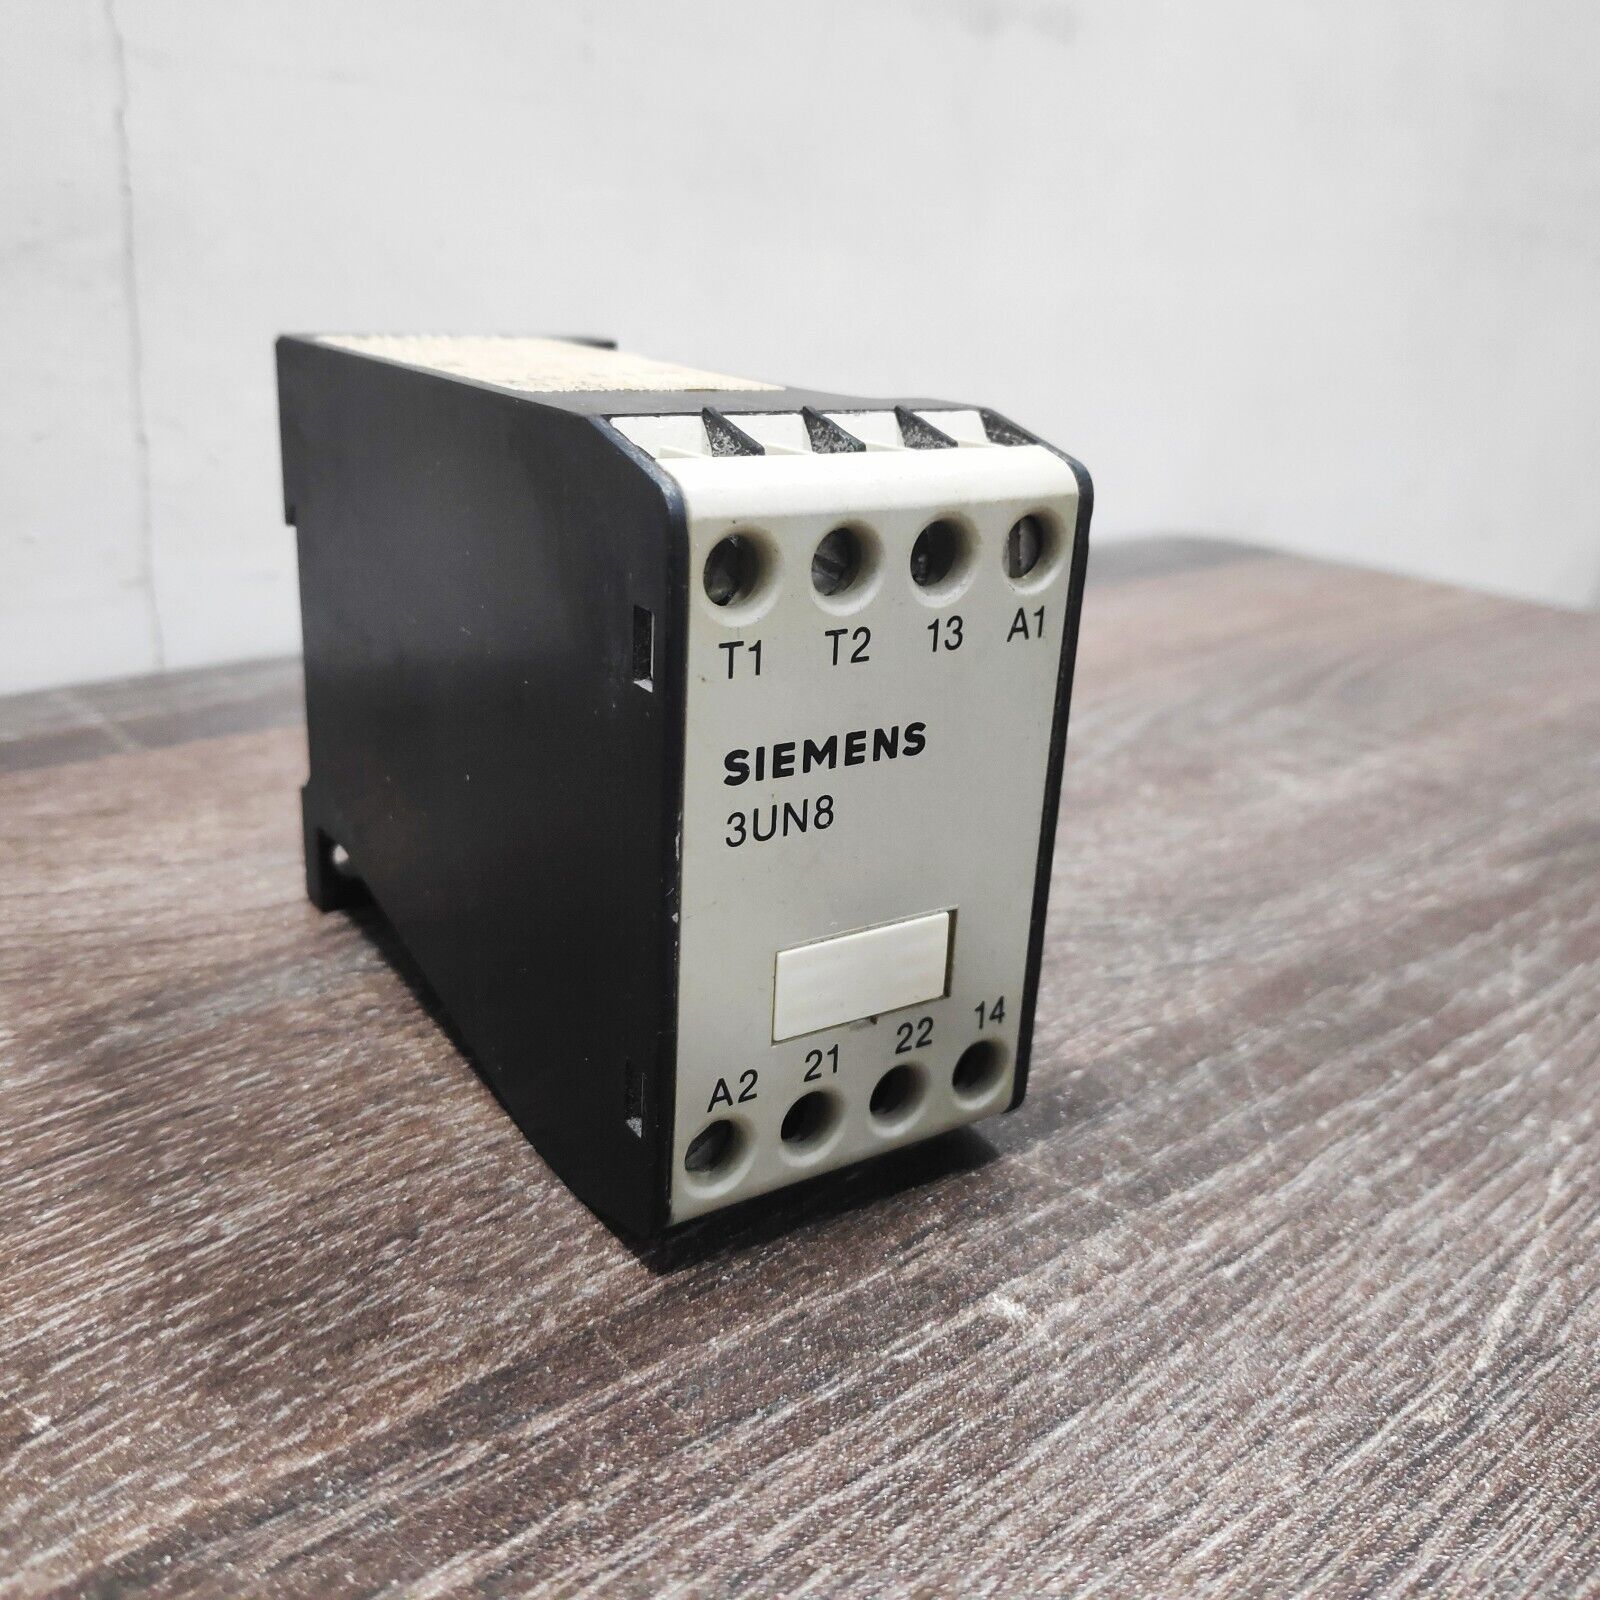  Siemens 3UN8-004 - Contactor